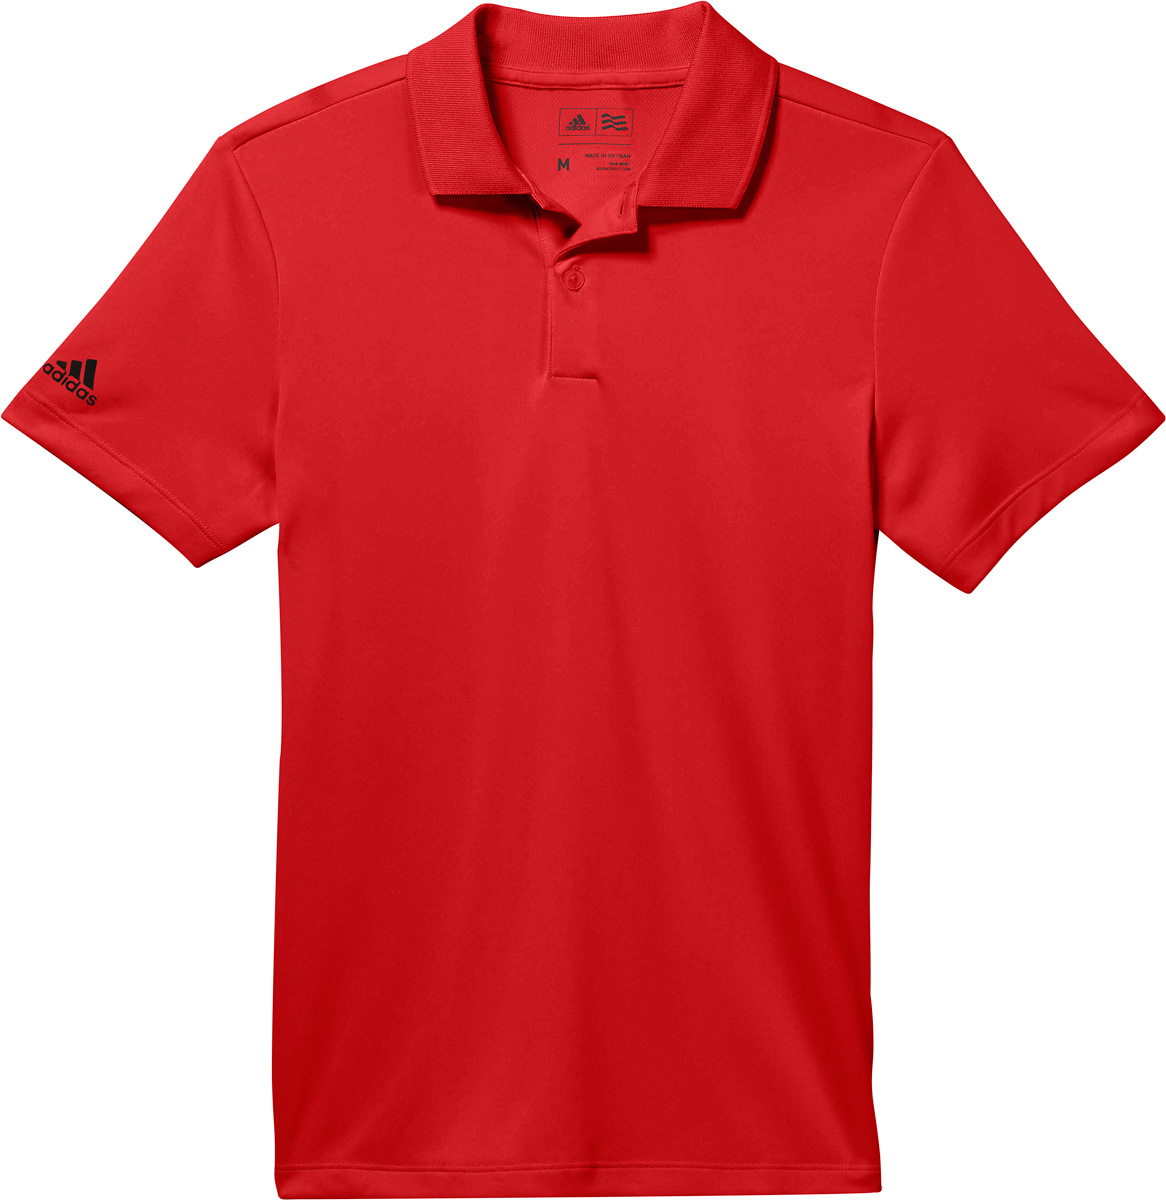 Adidas Tournament Junior Golf Shirts